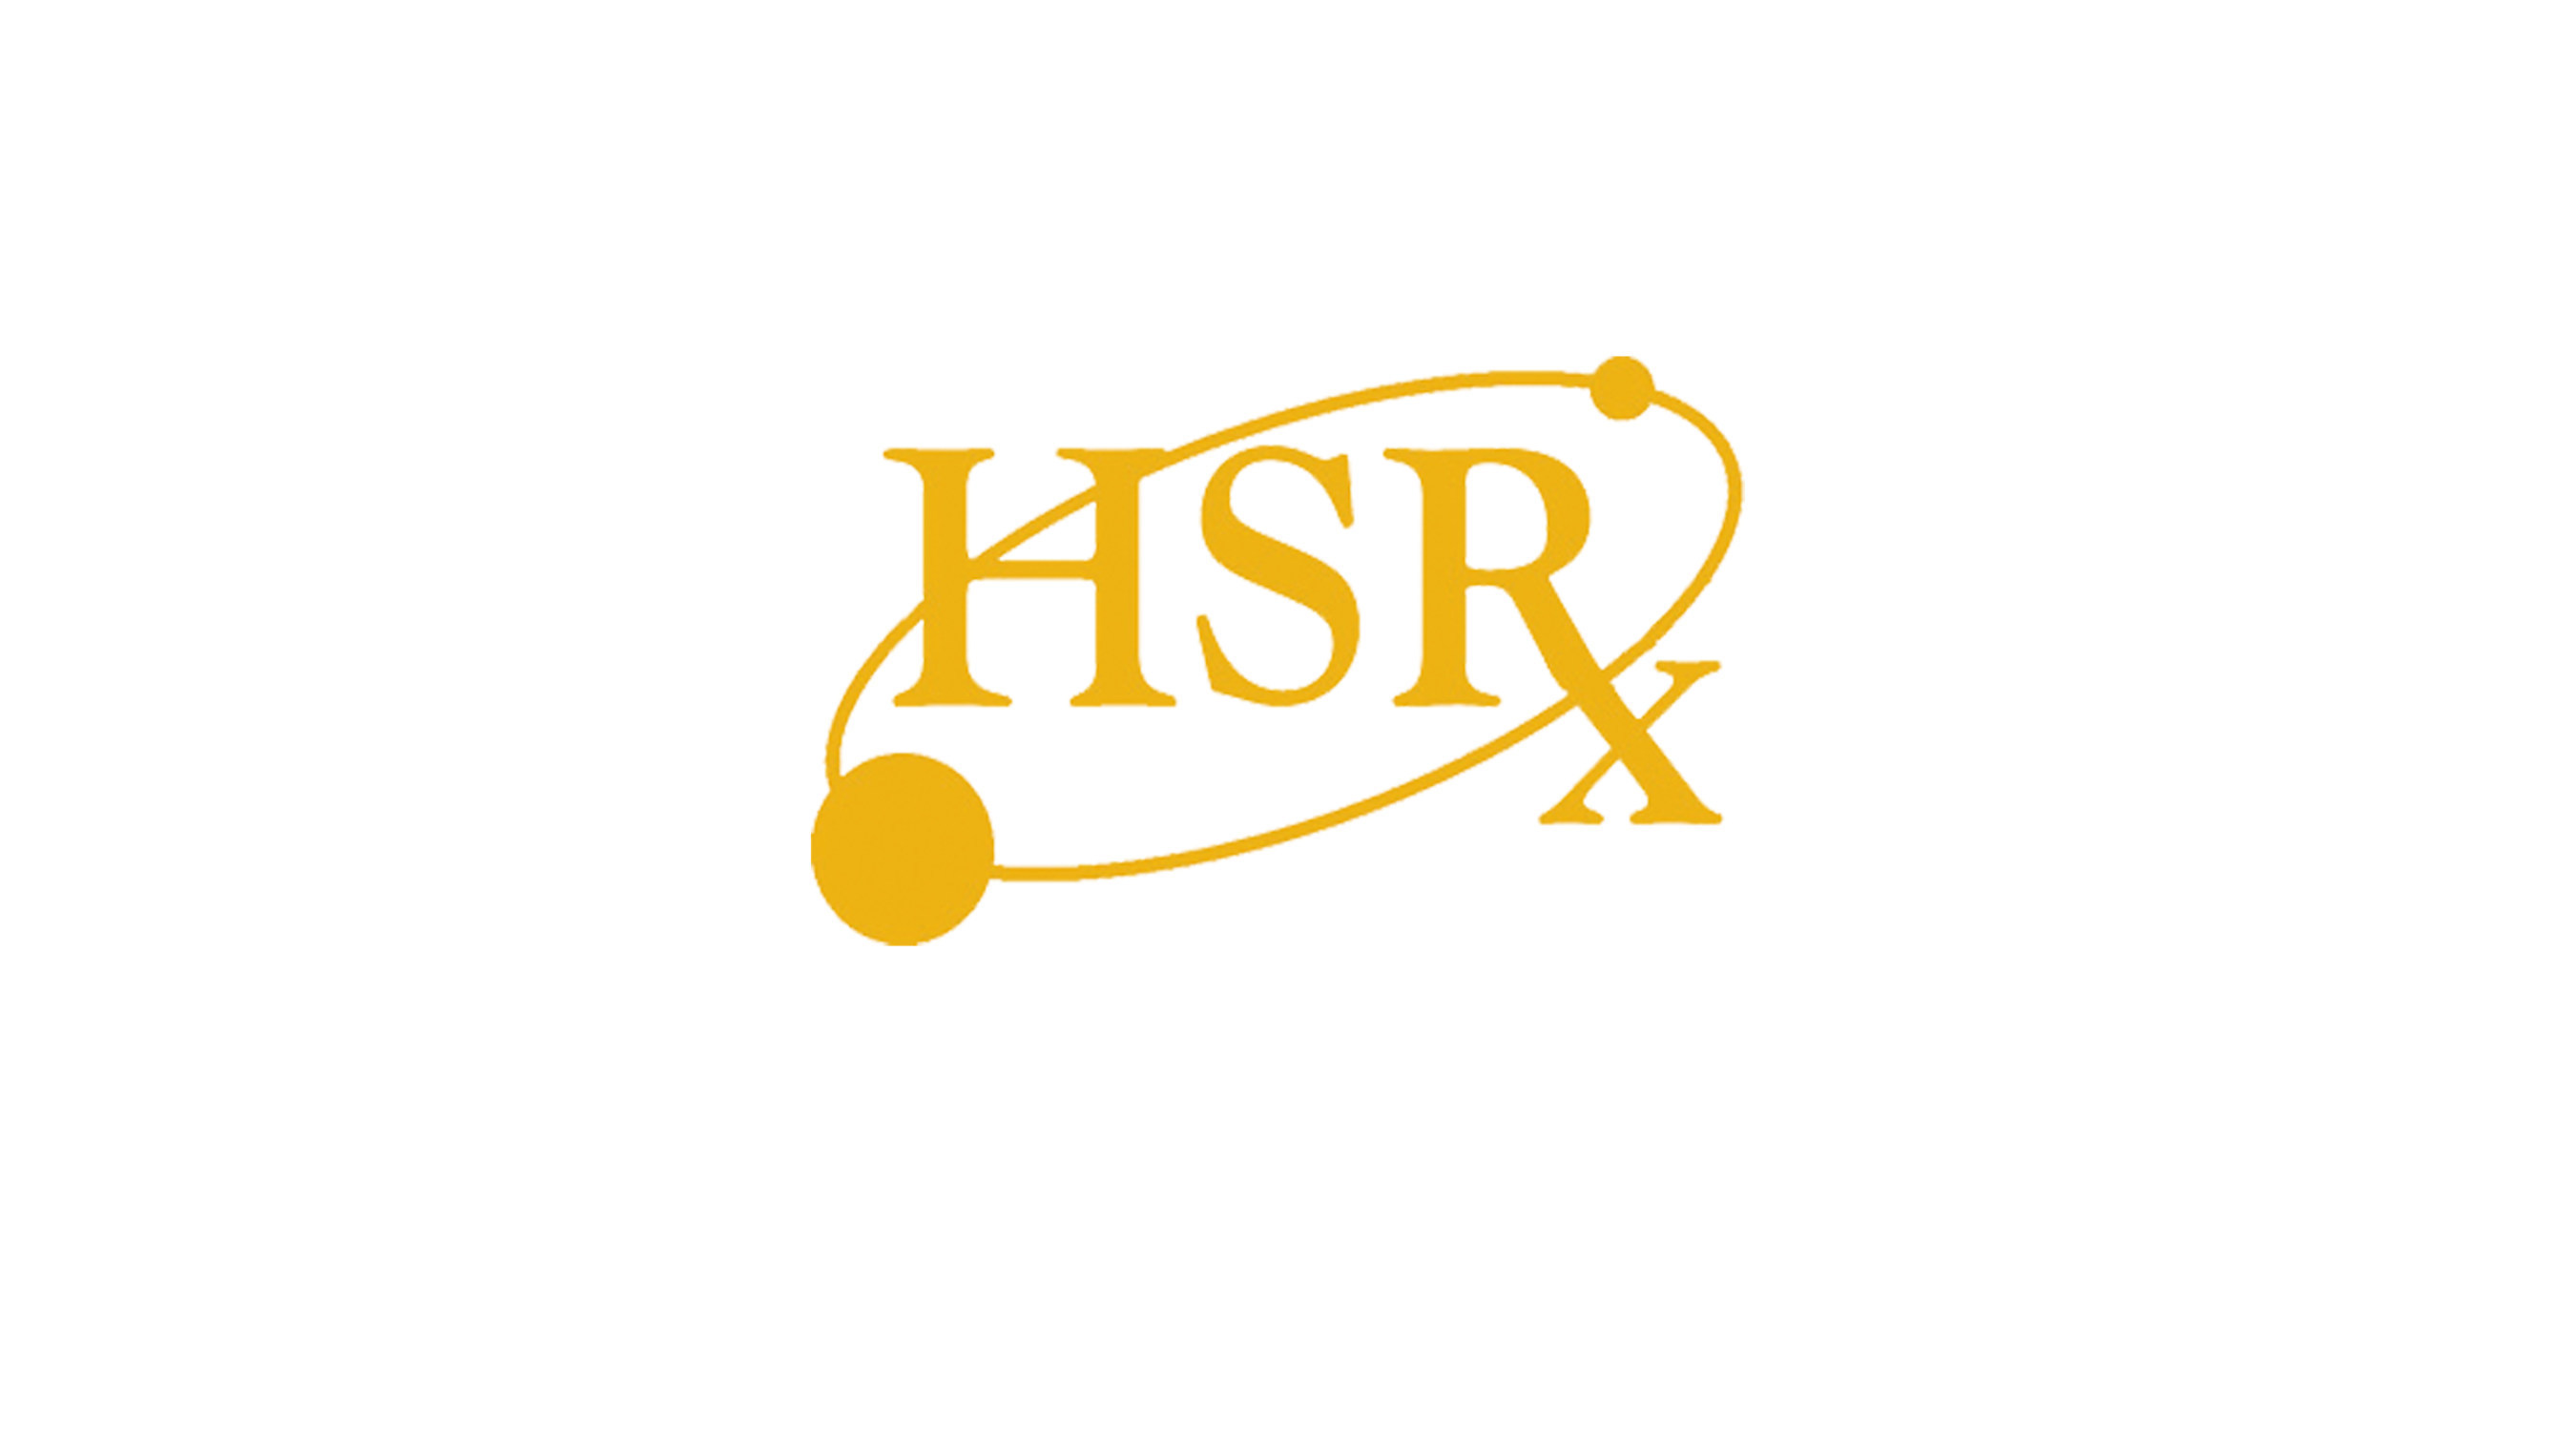 HSRx Biopharmaceutical